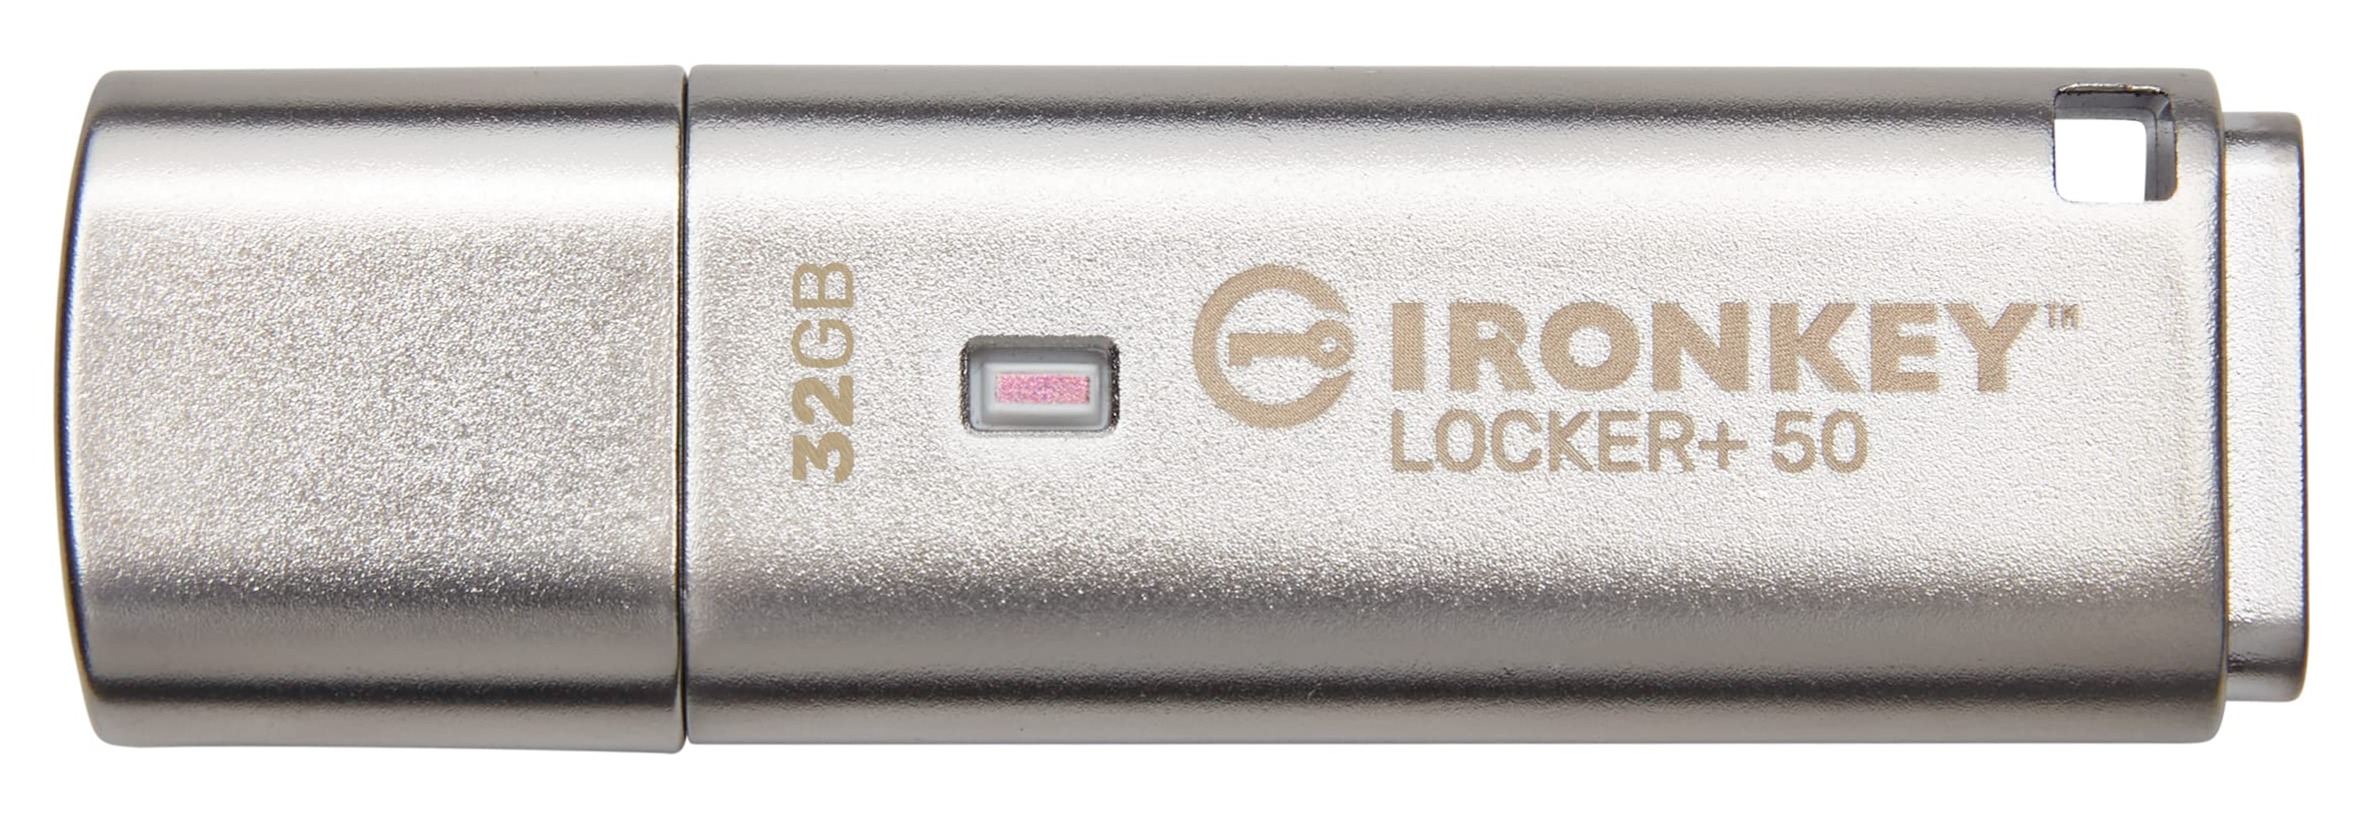 Kingston Ironkey Locker+ 50 | 32GB Encrypted USB Flash Drive $29.99 + FS w/ Prime